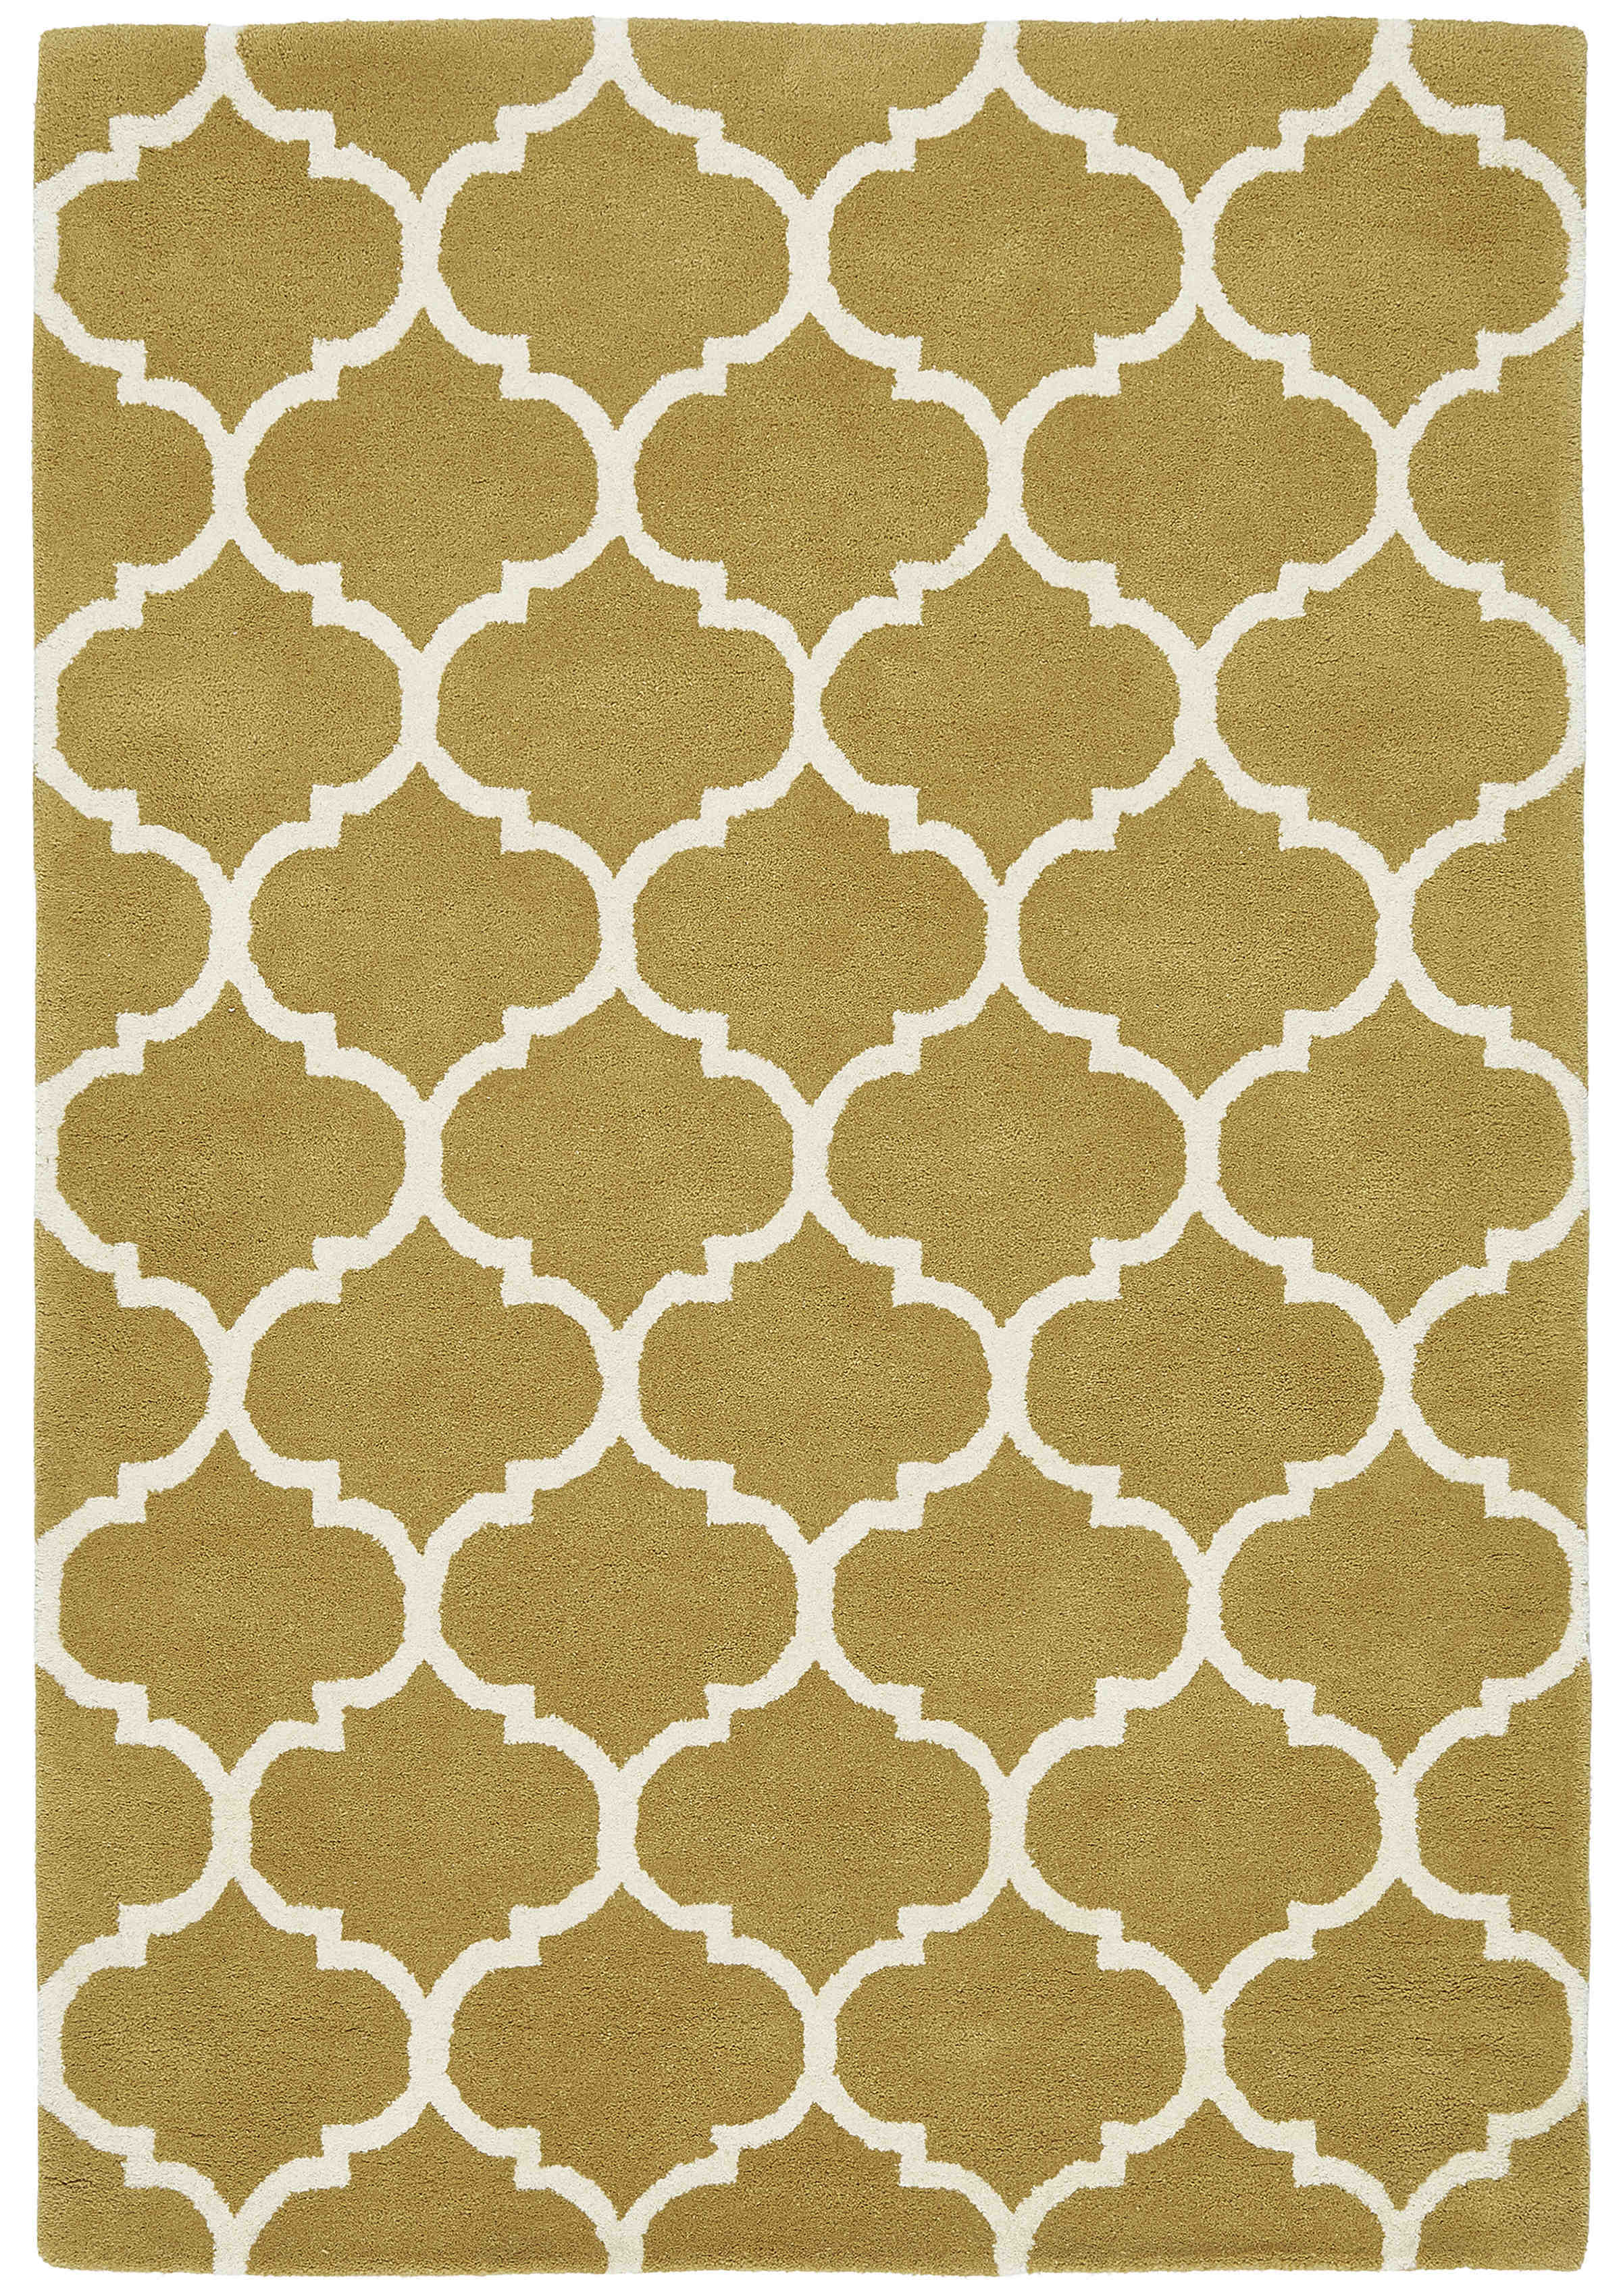 ogee ochre geometric rug with an ogee pattern